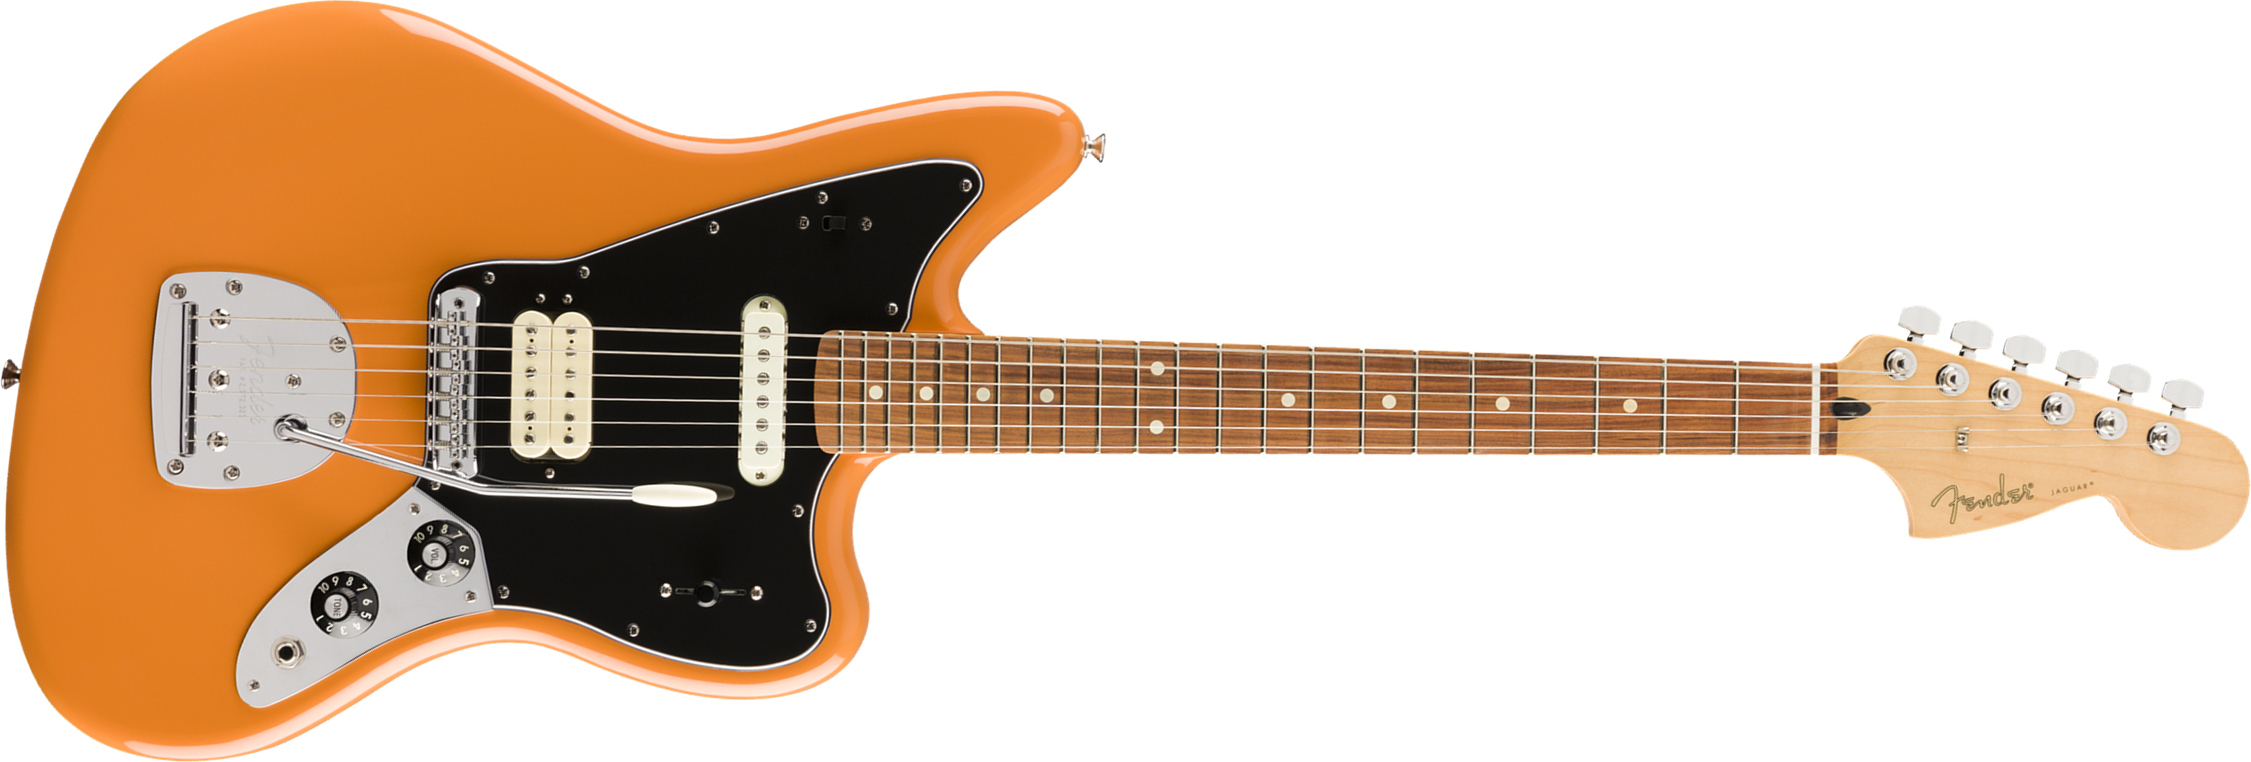 Fender Jaguar Player Mex Hs Pf - Capri Orange - Retro rock electric guitar - Main picture